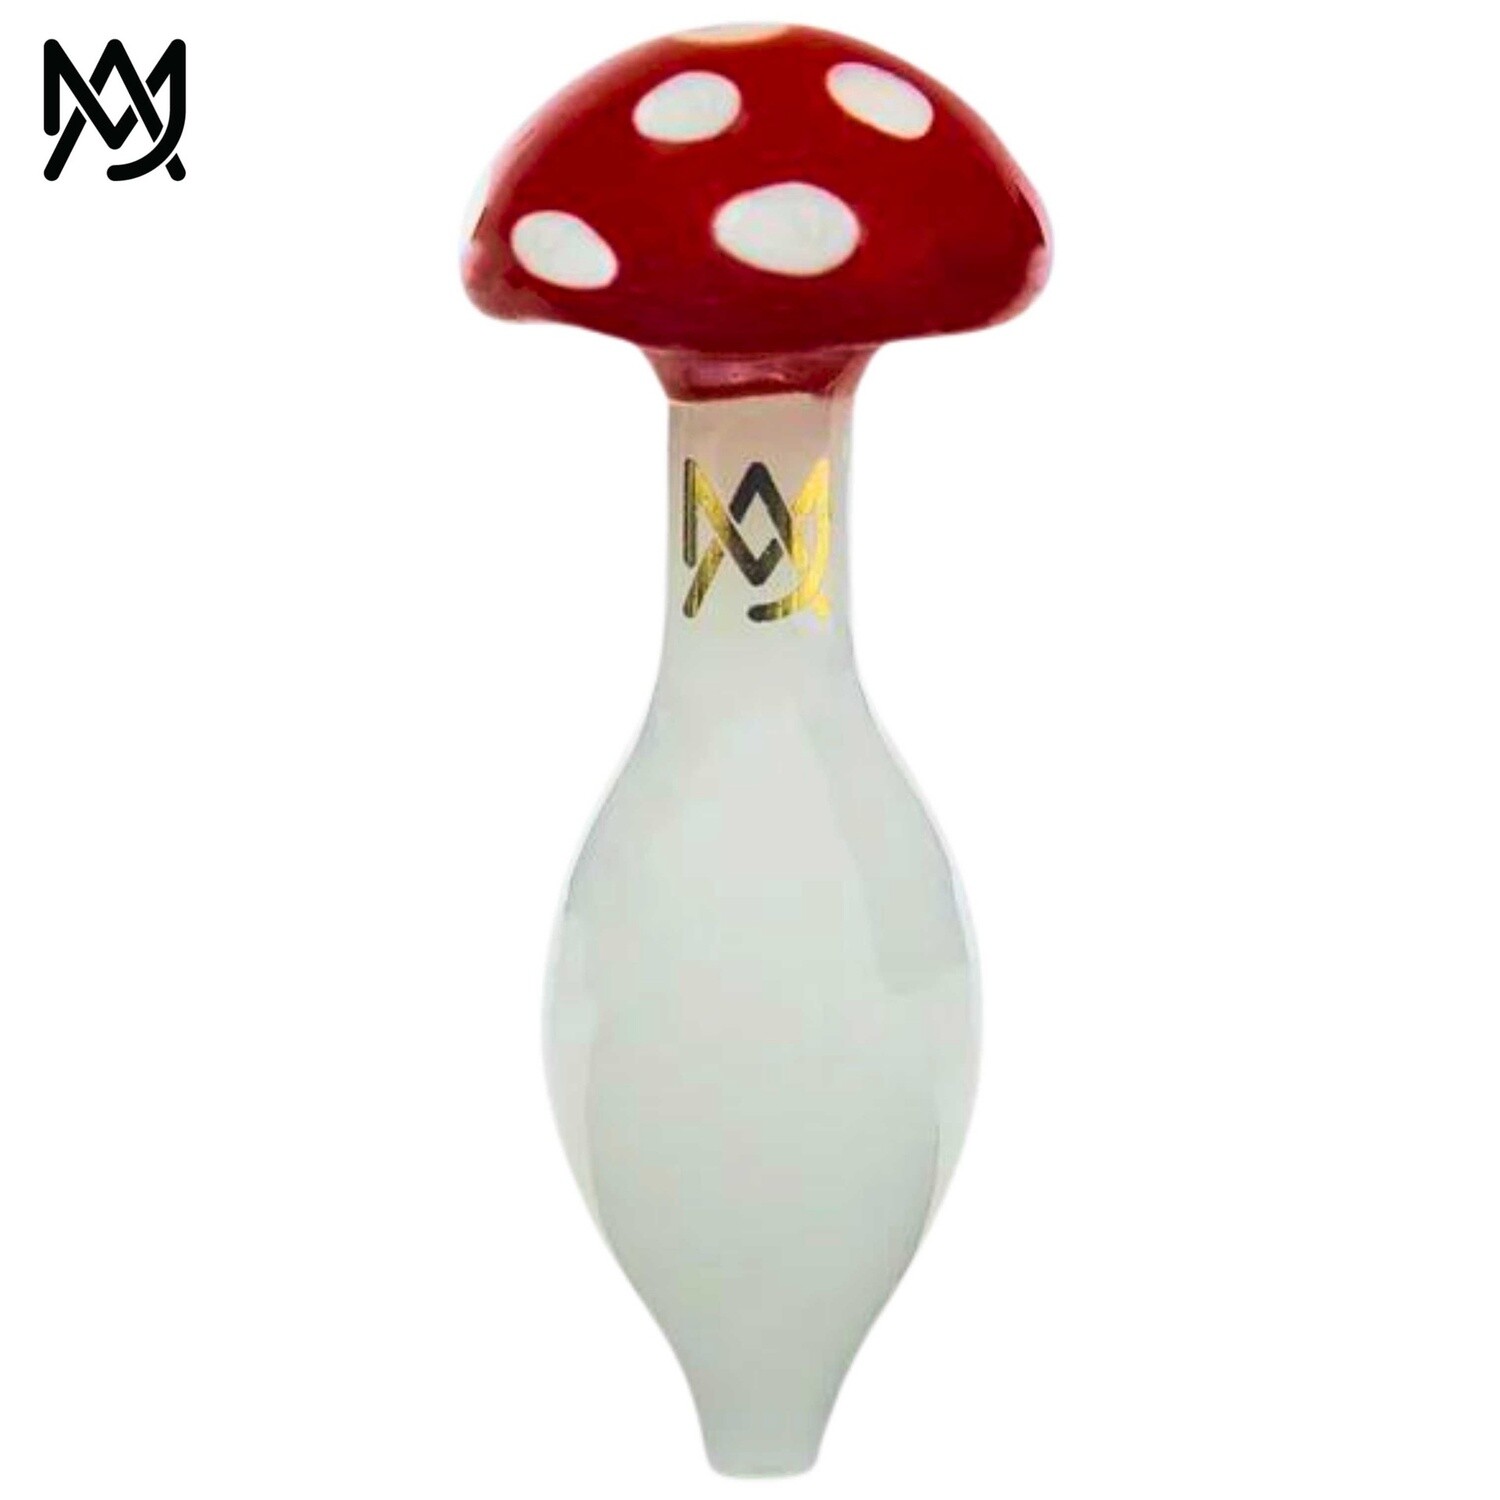 MJ Arsenal® Mushroom Bubble Cap